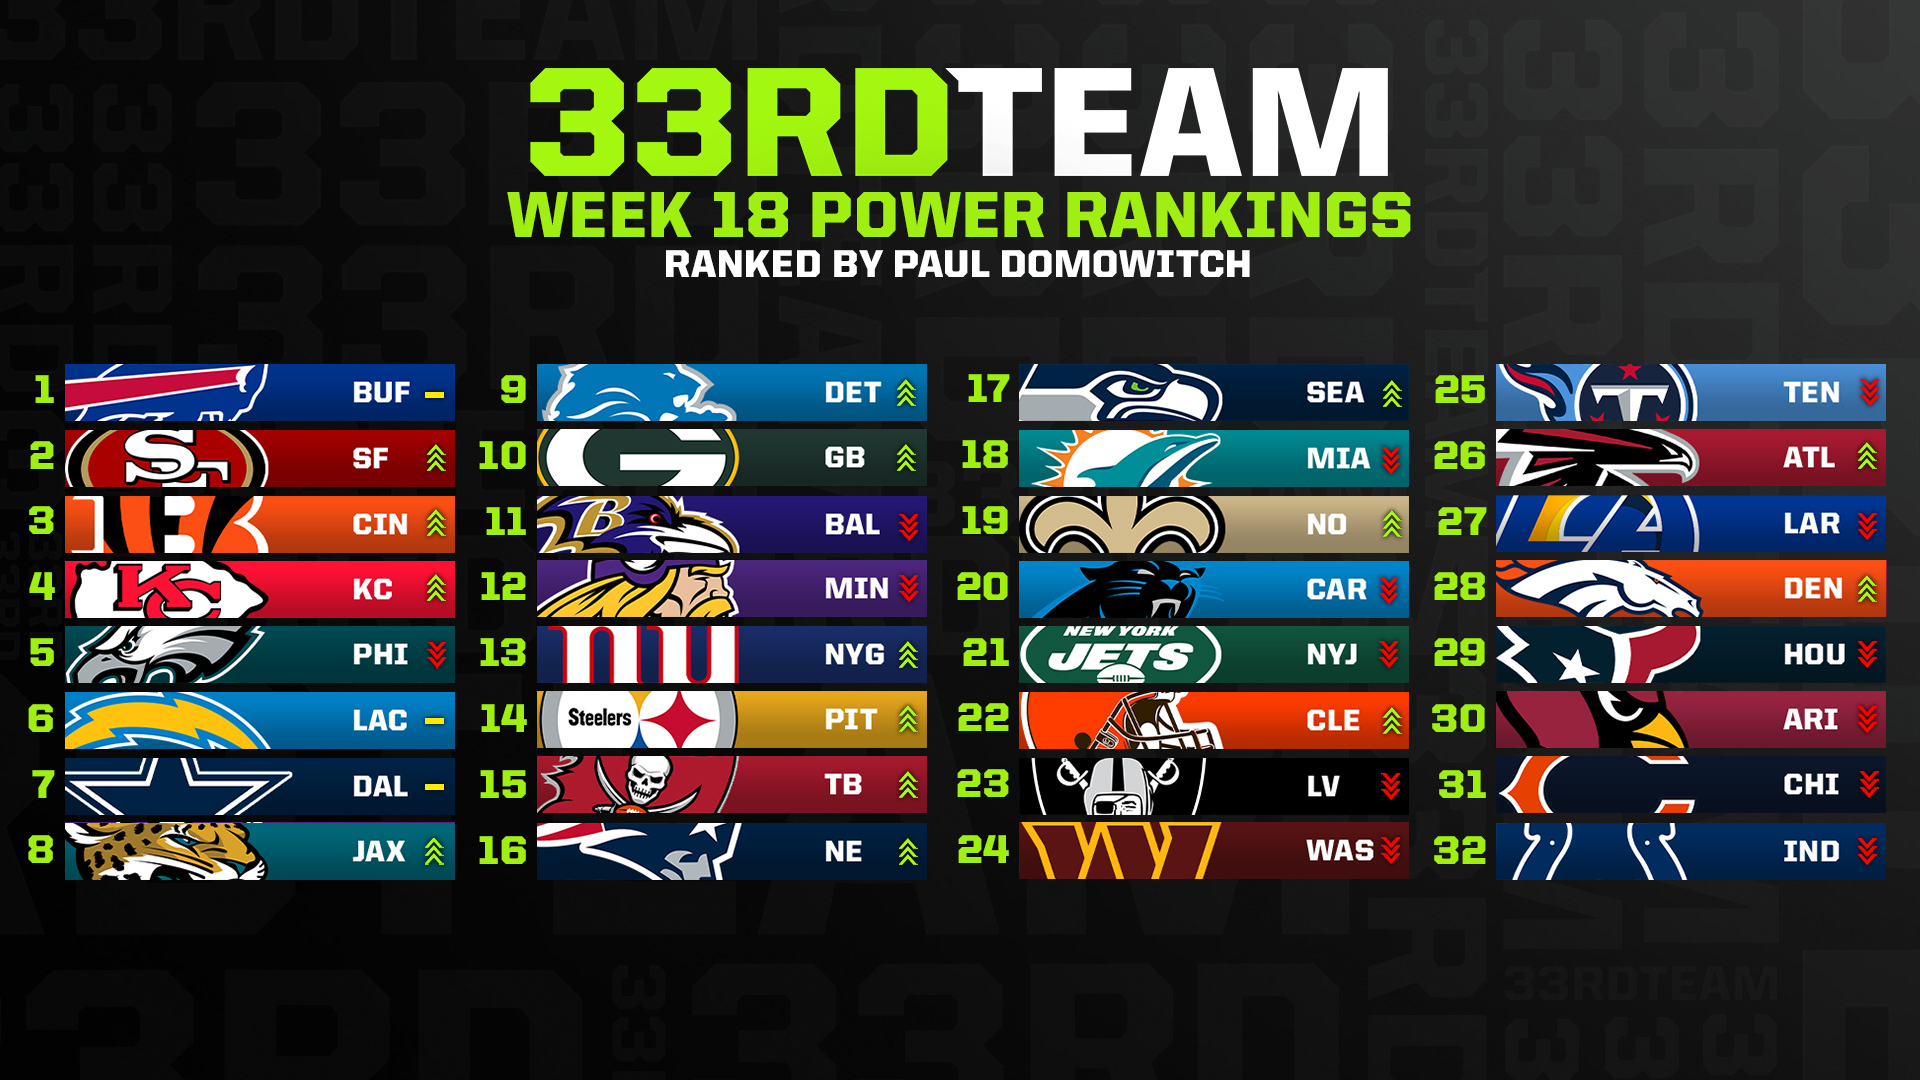 NFL Week 18 Power Rankings: Eagles Slide, 49ers Surge Entering Playoffs